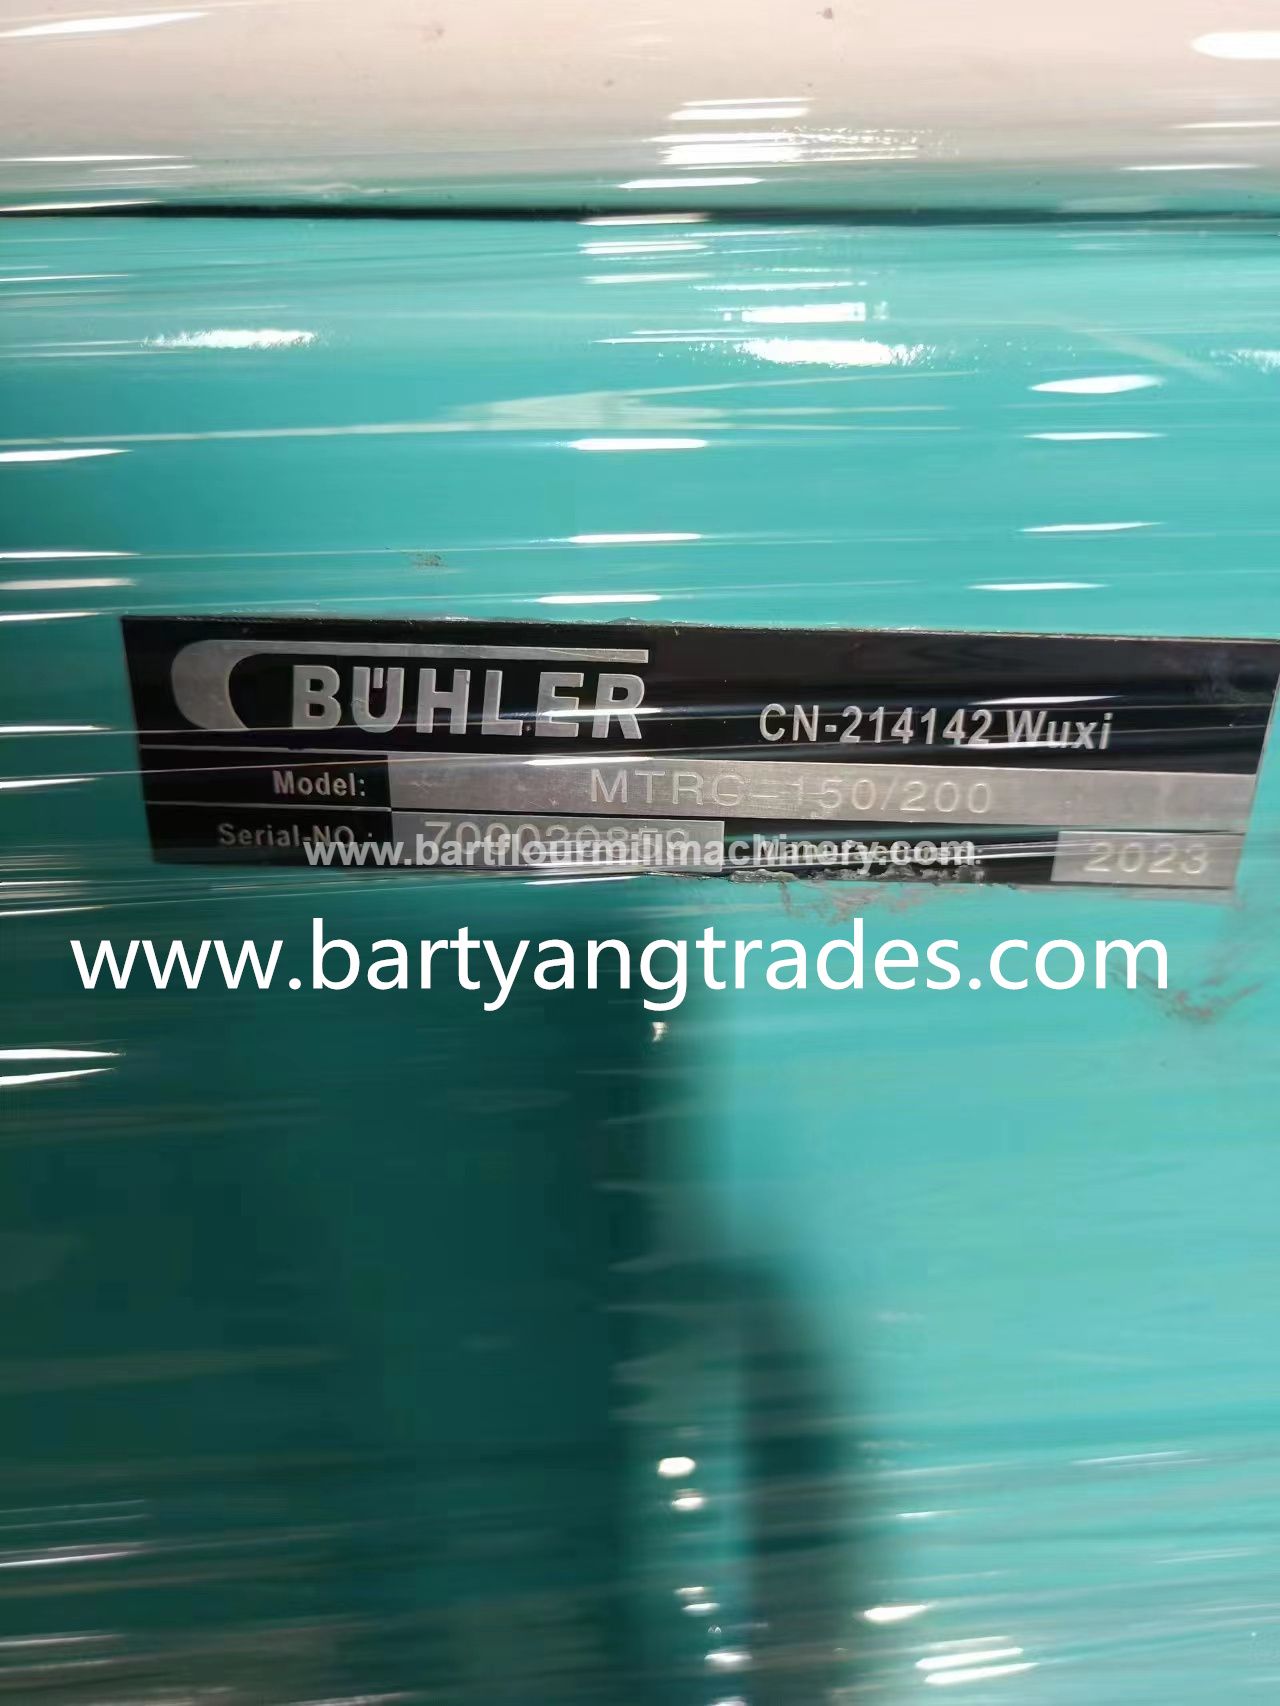 Refurbished Buhler Separator MTRC 150/200 for Sale